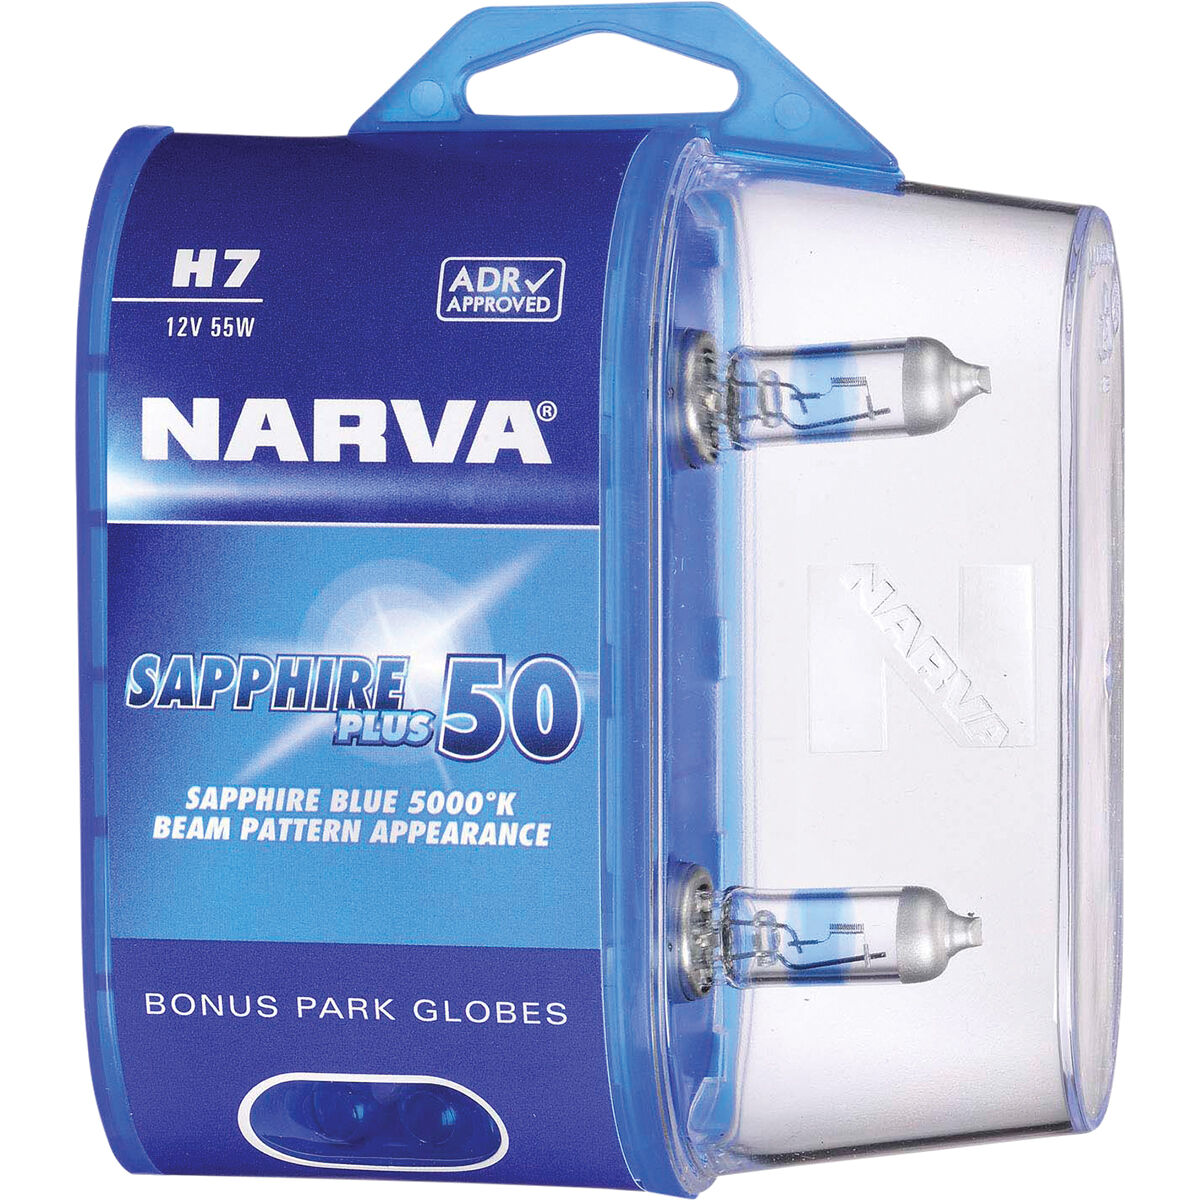 Narva Sapphire Plus 50 Headlight Globes - H7, 12V 55W, 48525BL2, , scaau_hi-res